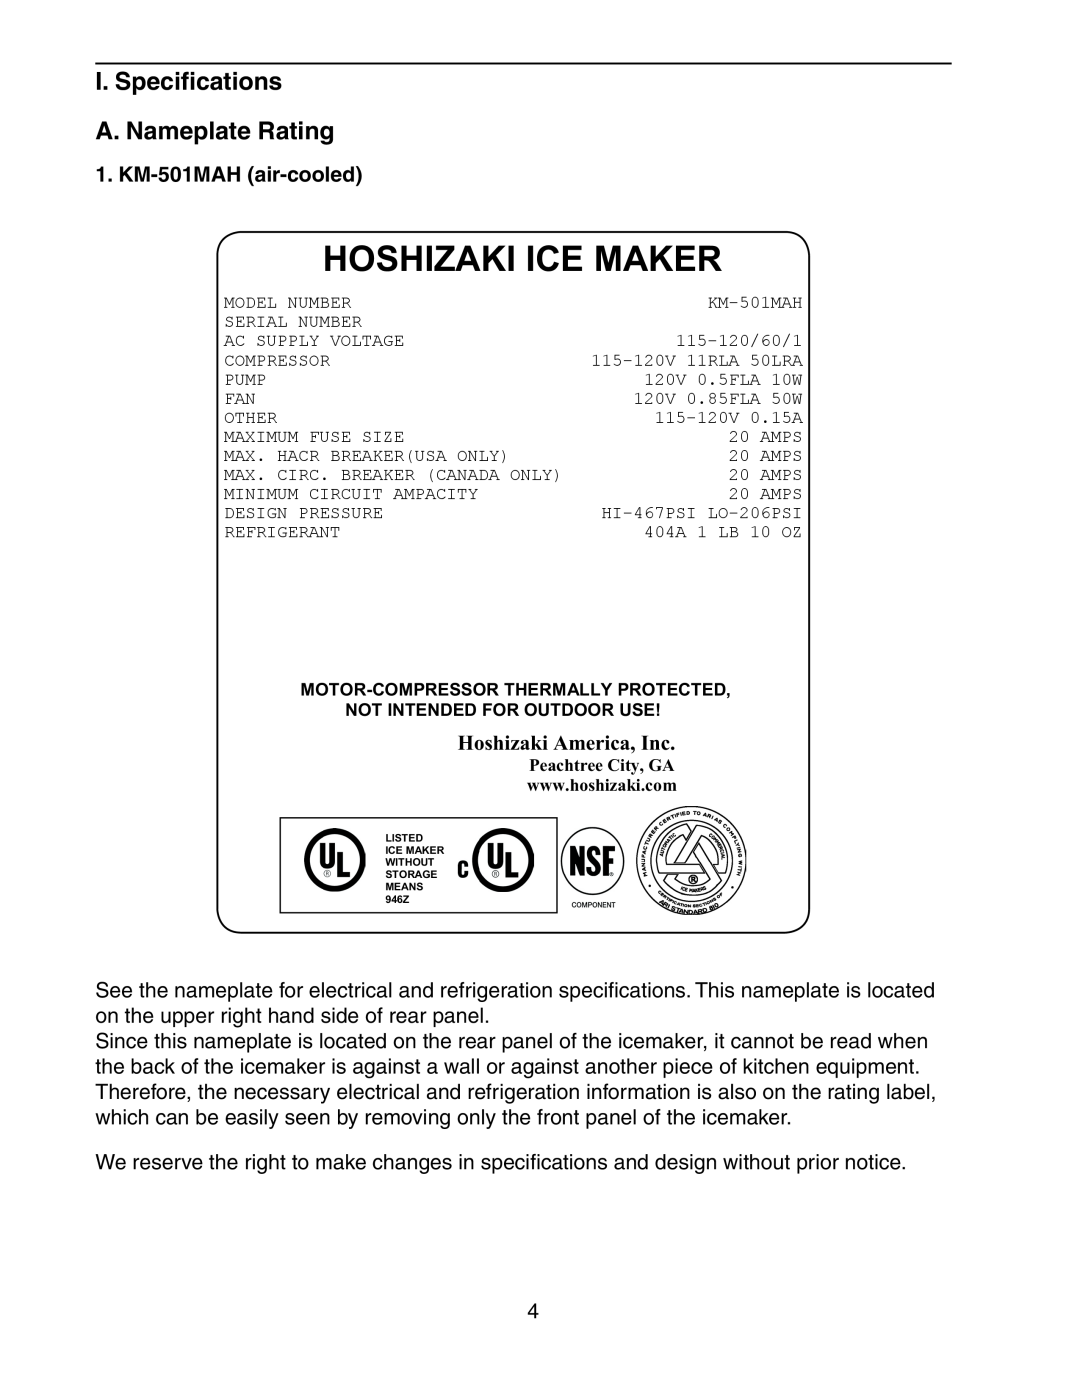 Hoshizaki KM-501MRH, KM-501MWH Hoshizaki Ice Maker, I. Speciﬁcations A. Nameplate Rating, KM-501MAH air-cooled 